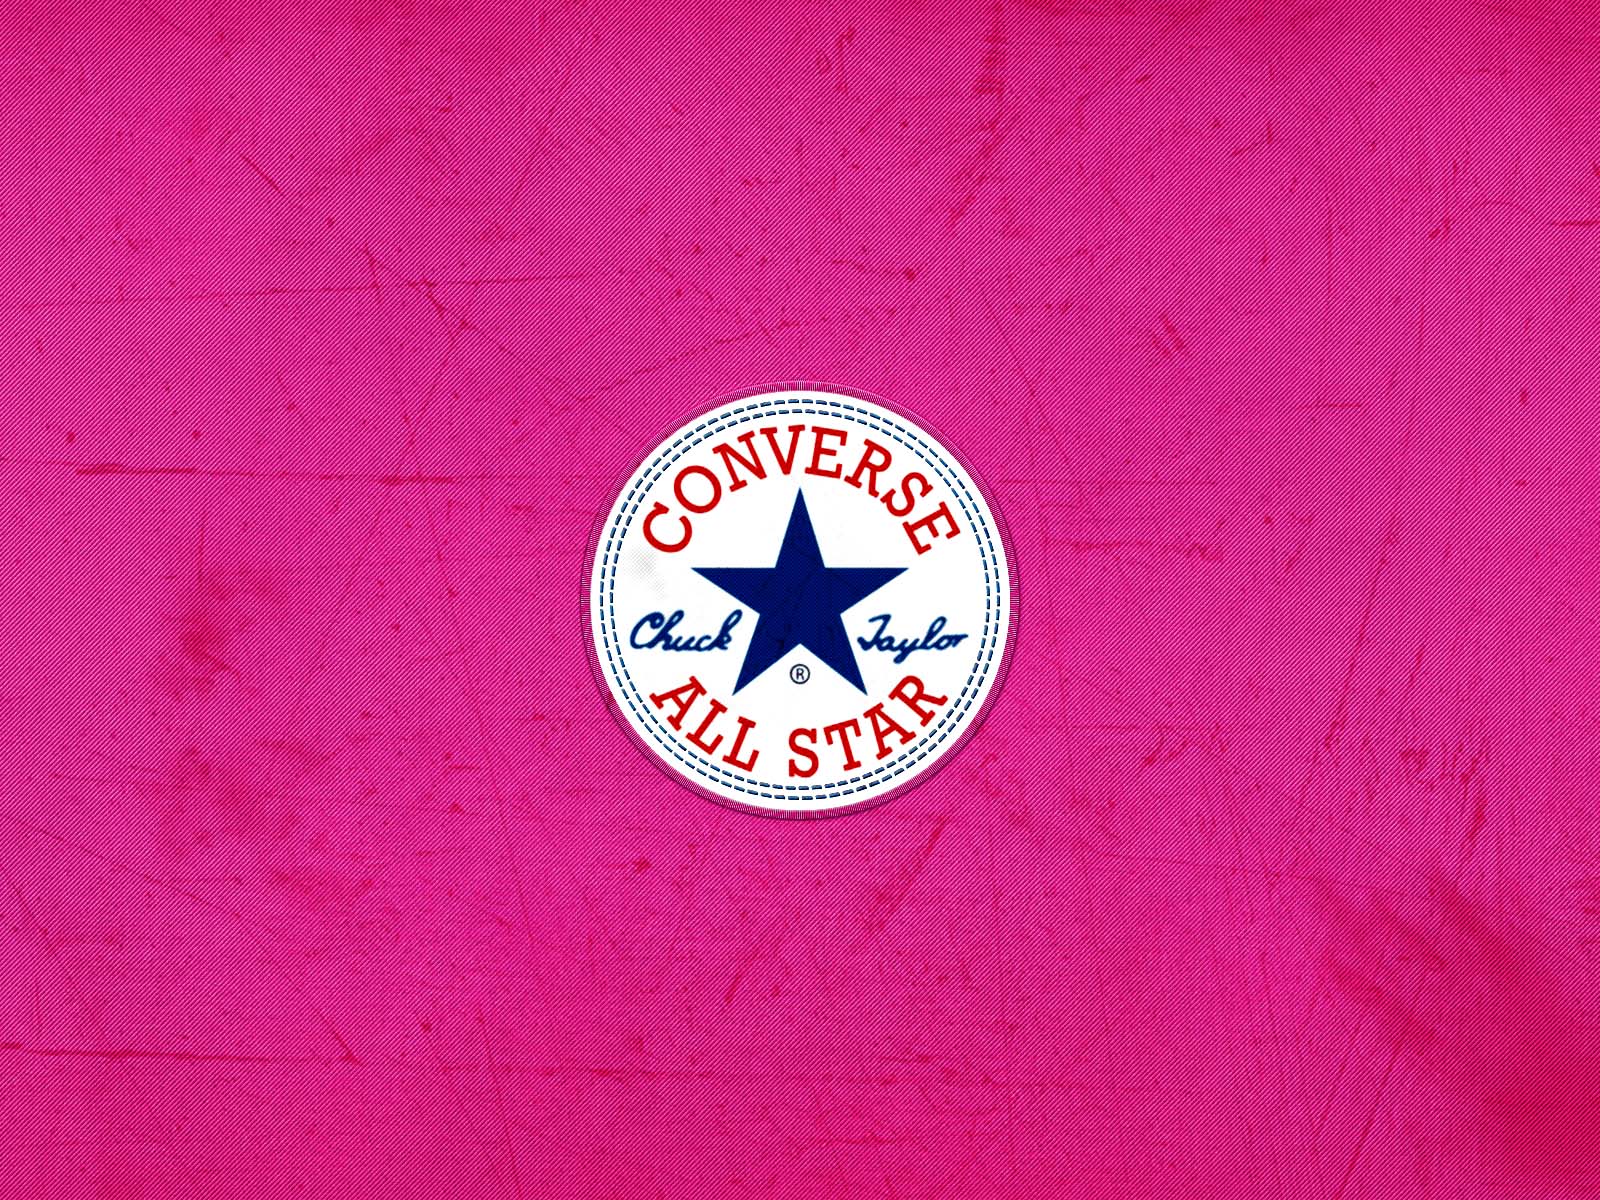 Converse All Star HD Logo Wallpapers | Desktop Wallpapers